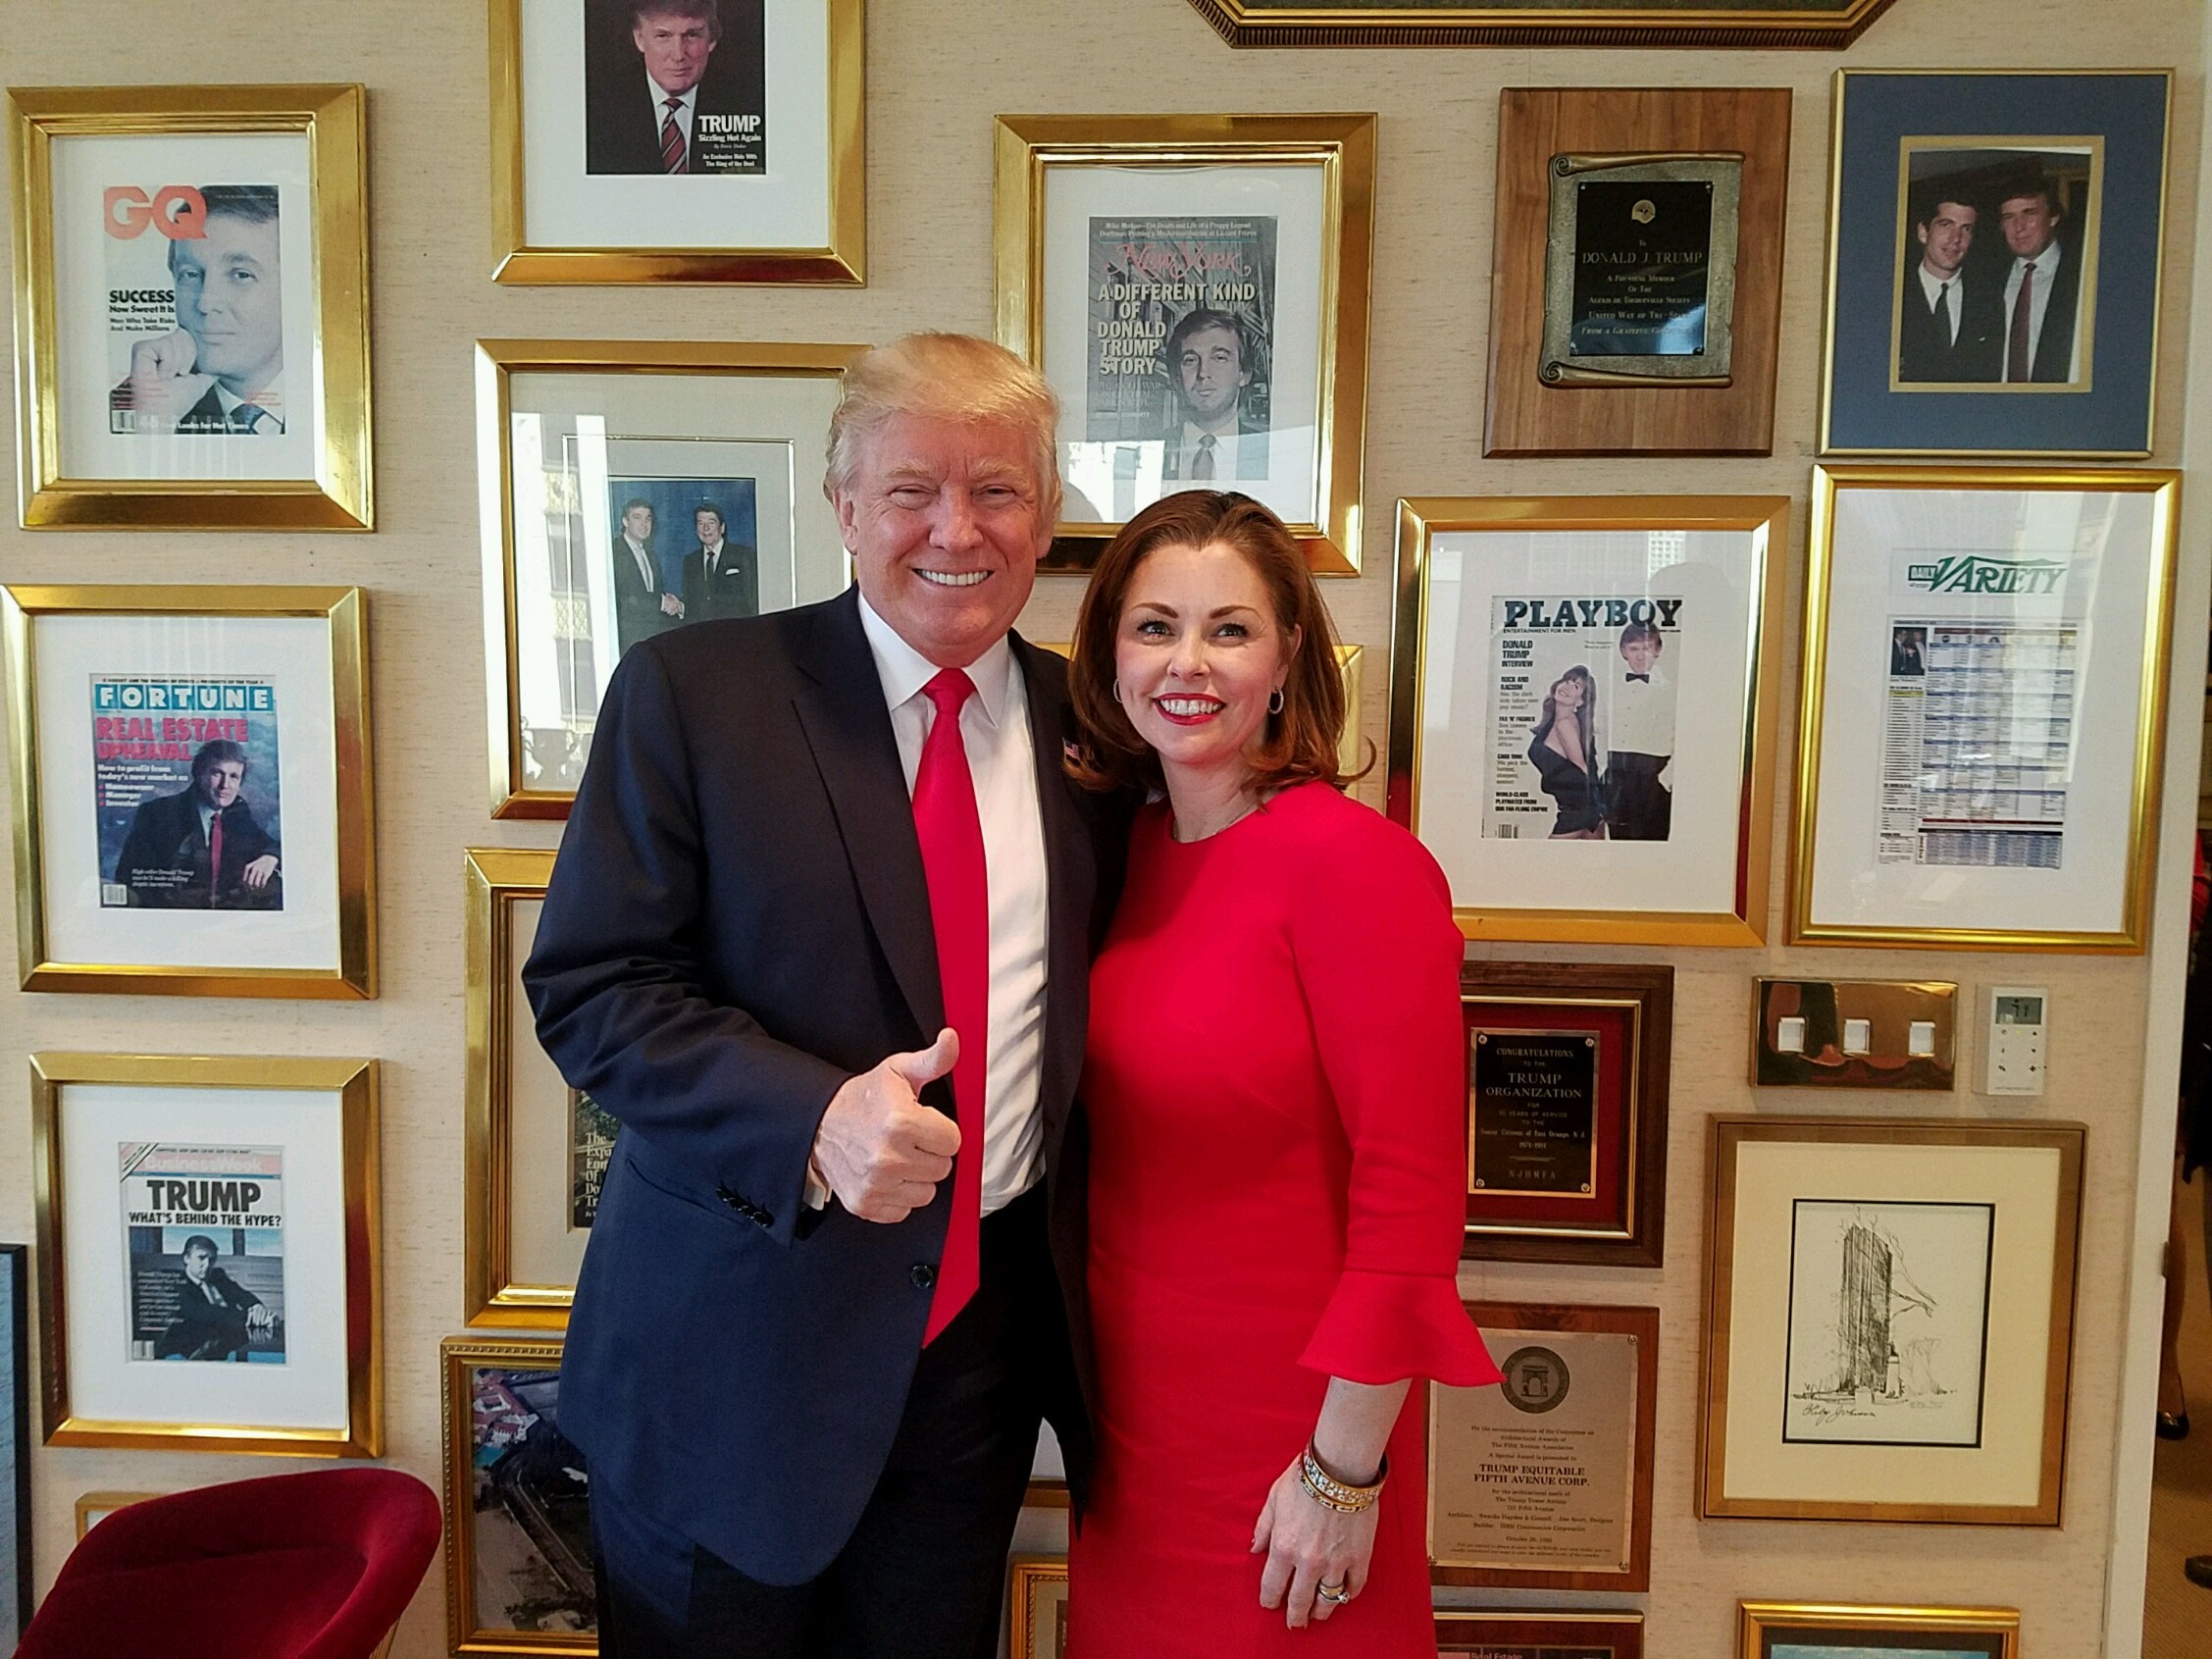 Hempstead Town Councilwoman Erin King Sweeney met President-elect Donald Trump in New York City in December.